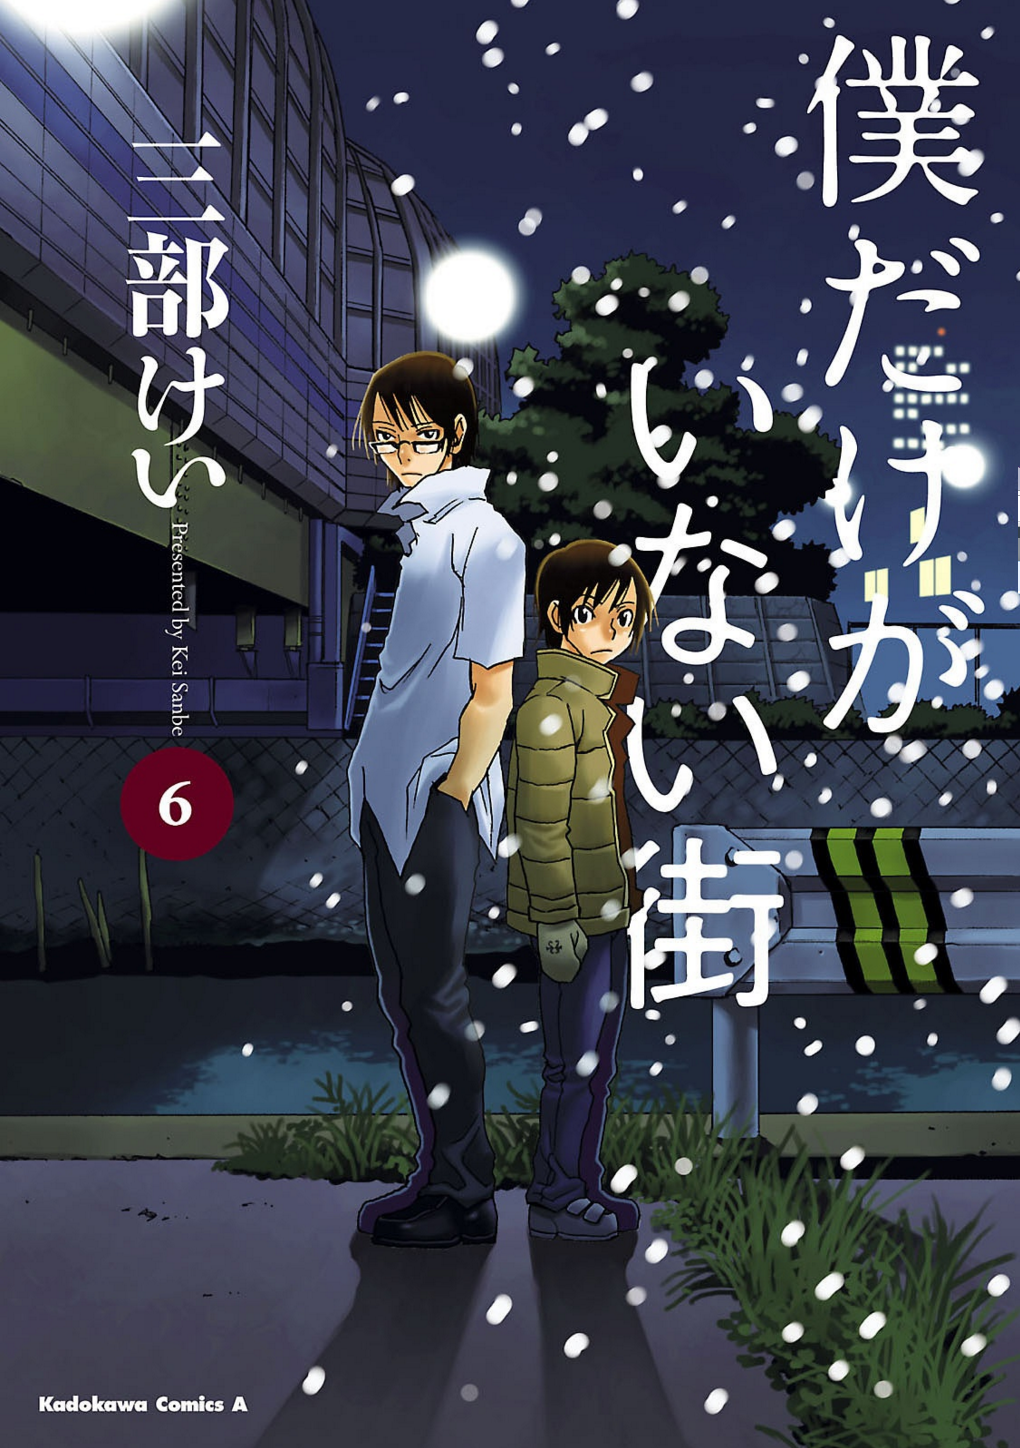 Autor de Boku Dake ga Inai Machi vai lançar novo mangá - IntoxiAnime